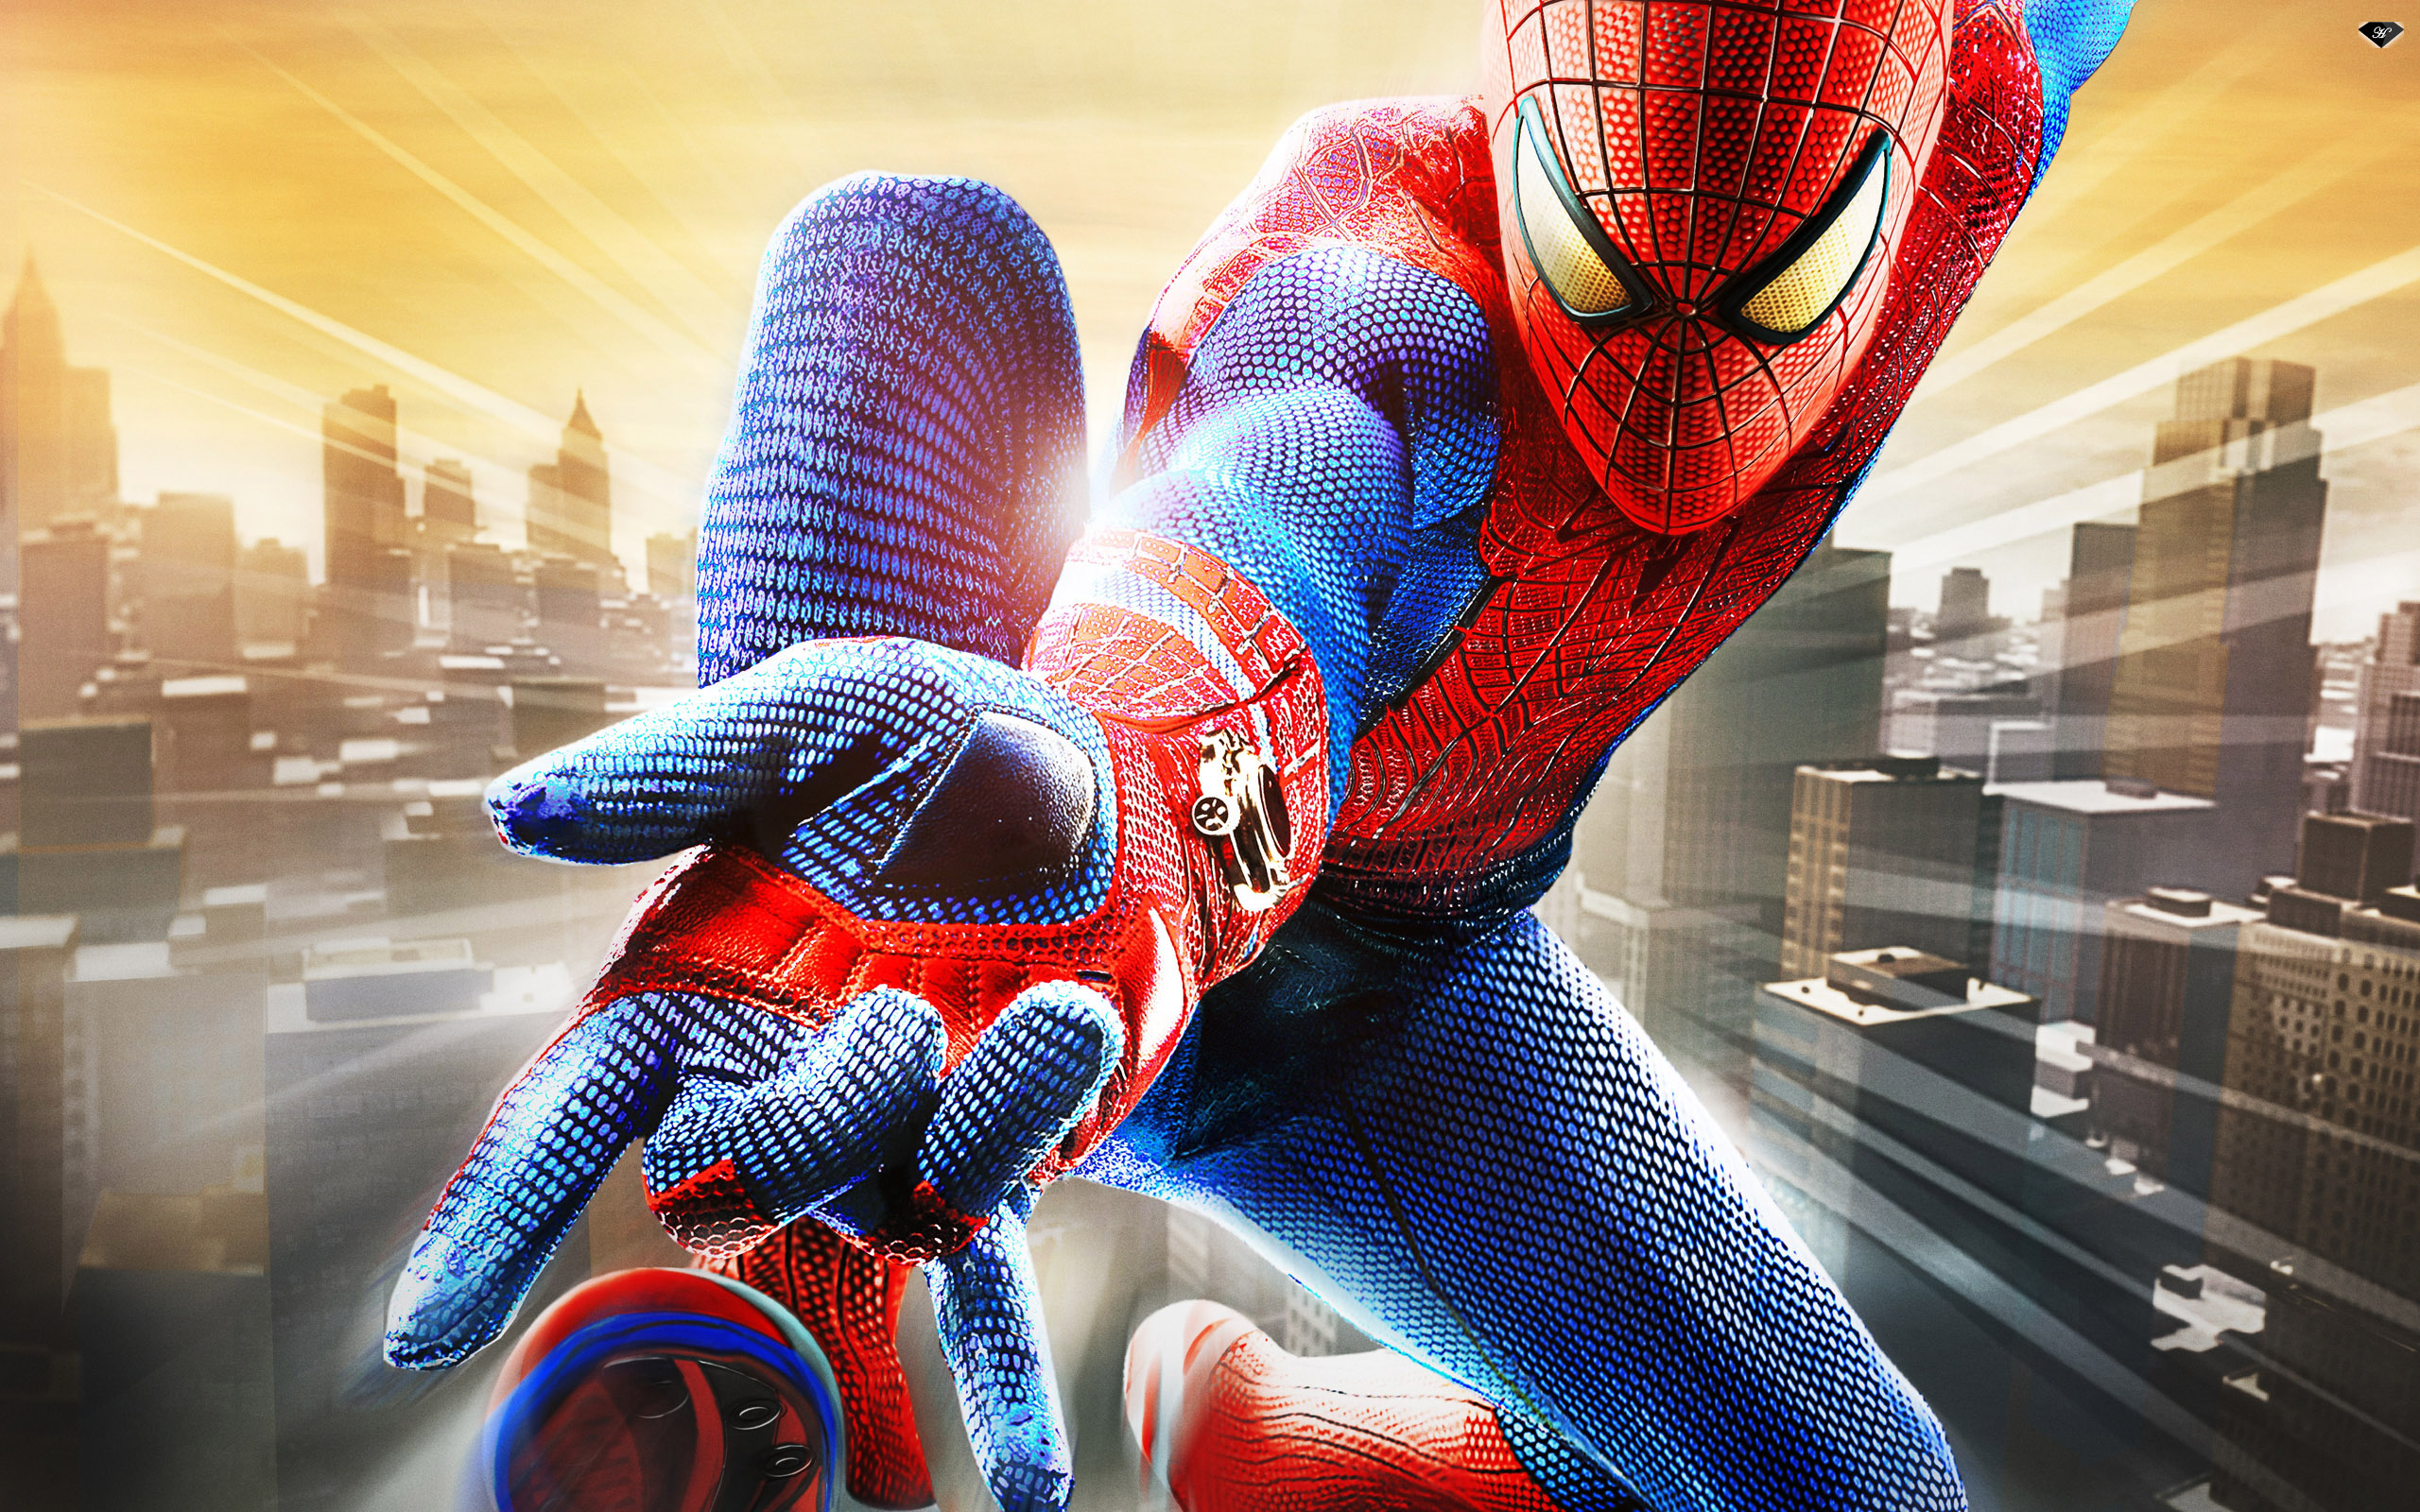 261394 descargar imagen videojuego, the amazing spider man, hombre araña: fondos de pantalla y protectores de pantalla gratis